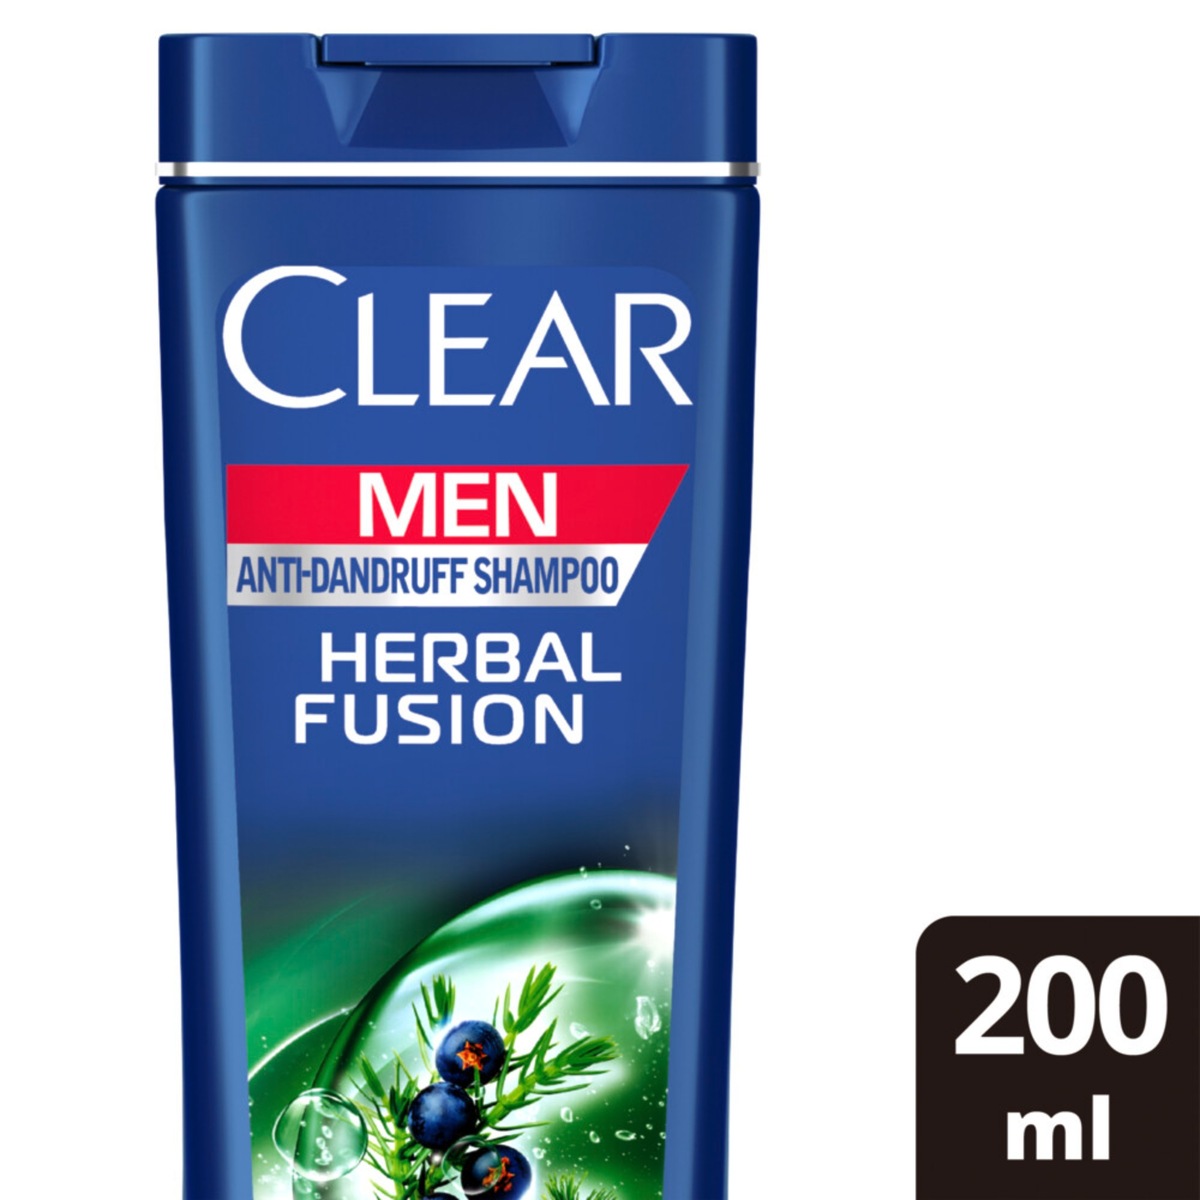 Clear Men's Herbal Fusion Anti-Dandruff Shampoo 200 ml